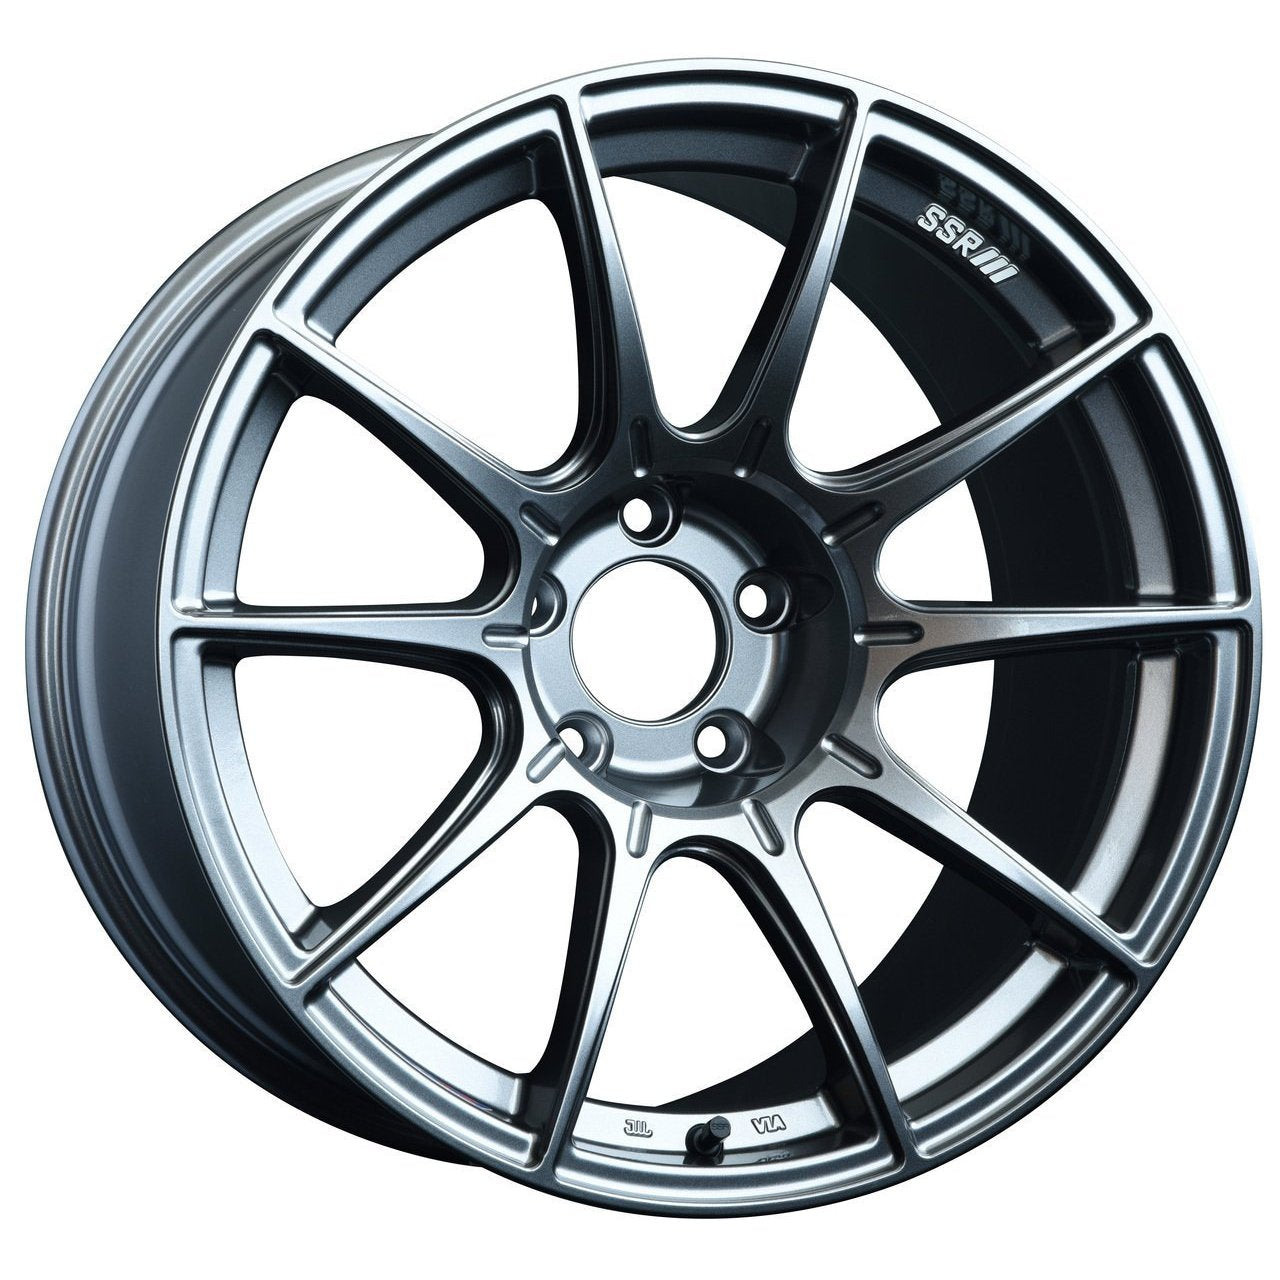 SSR GTX01 19x8.5 5x114.3 45mm Offset Dark Silver Wheel - Universal-XA19850+4505GDK-Wheels-SSR Wheels-JDMuscle